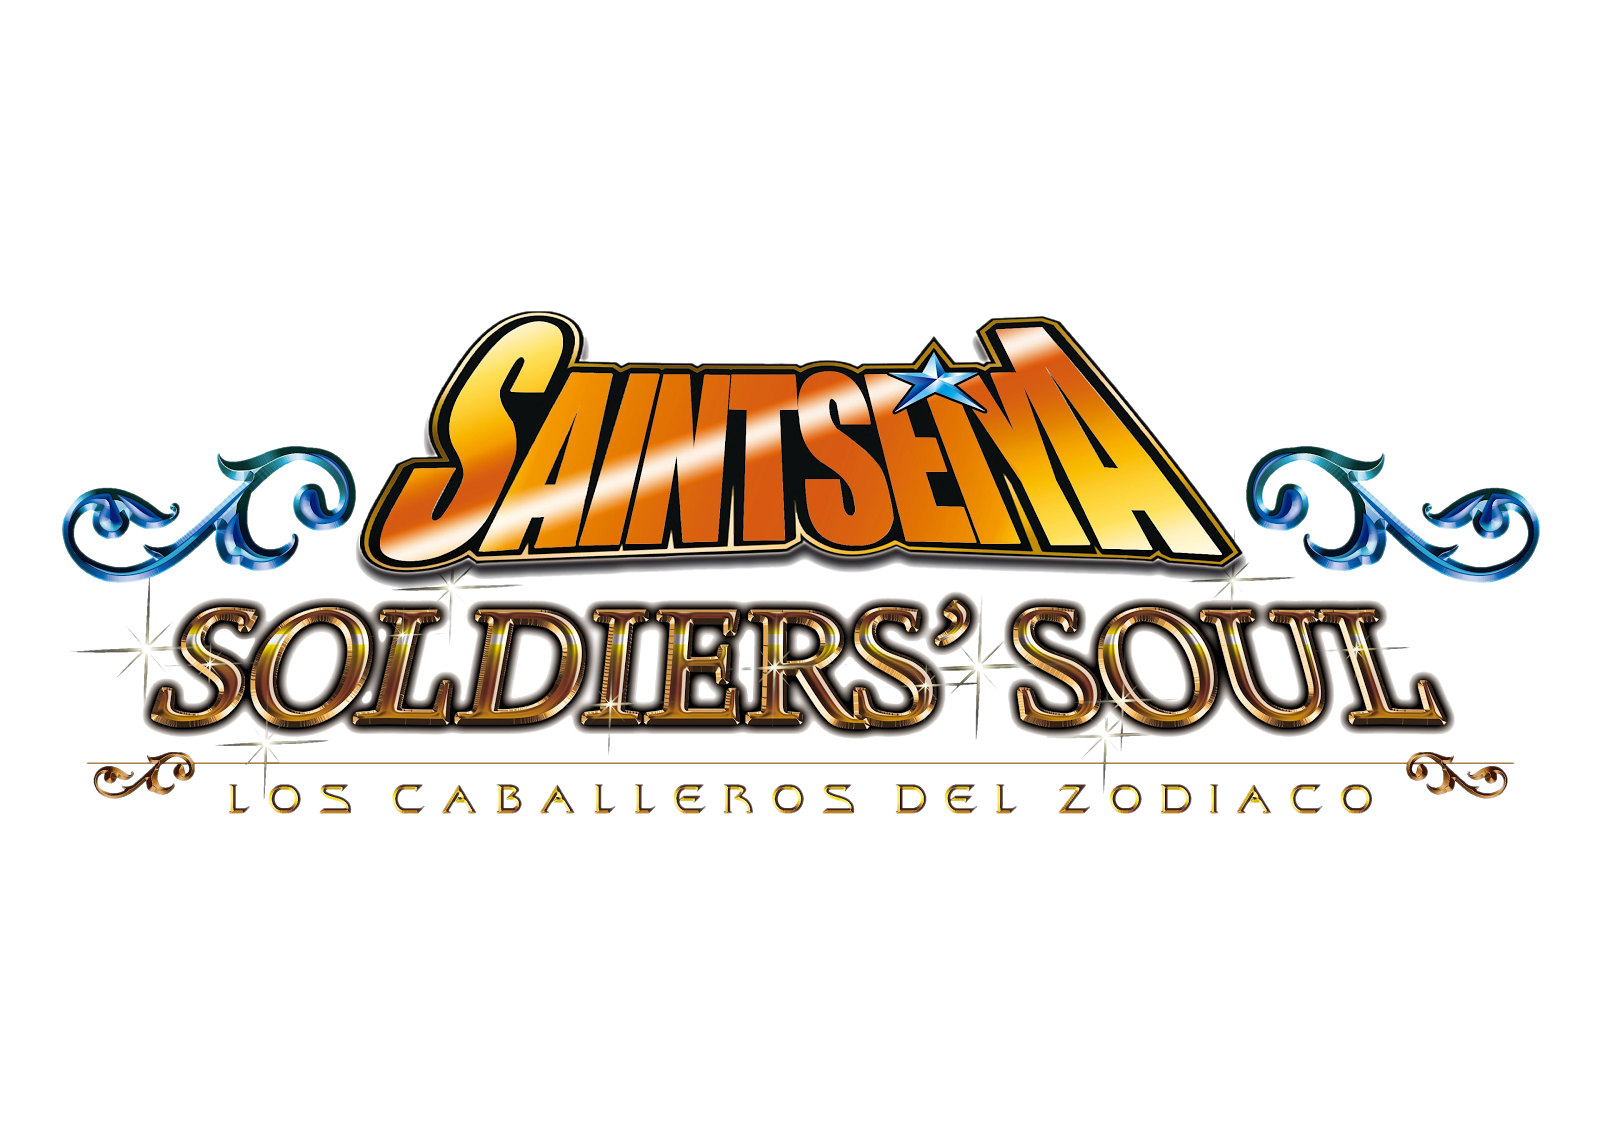 Saint Seiya Soldier's Soul Mods